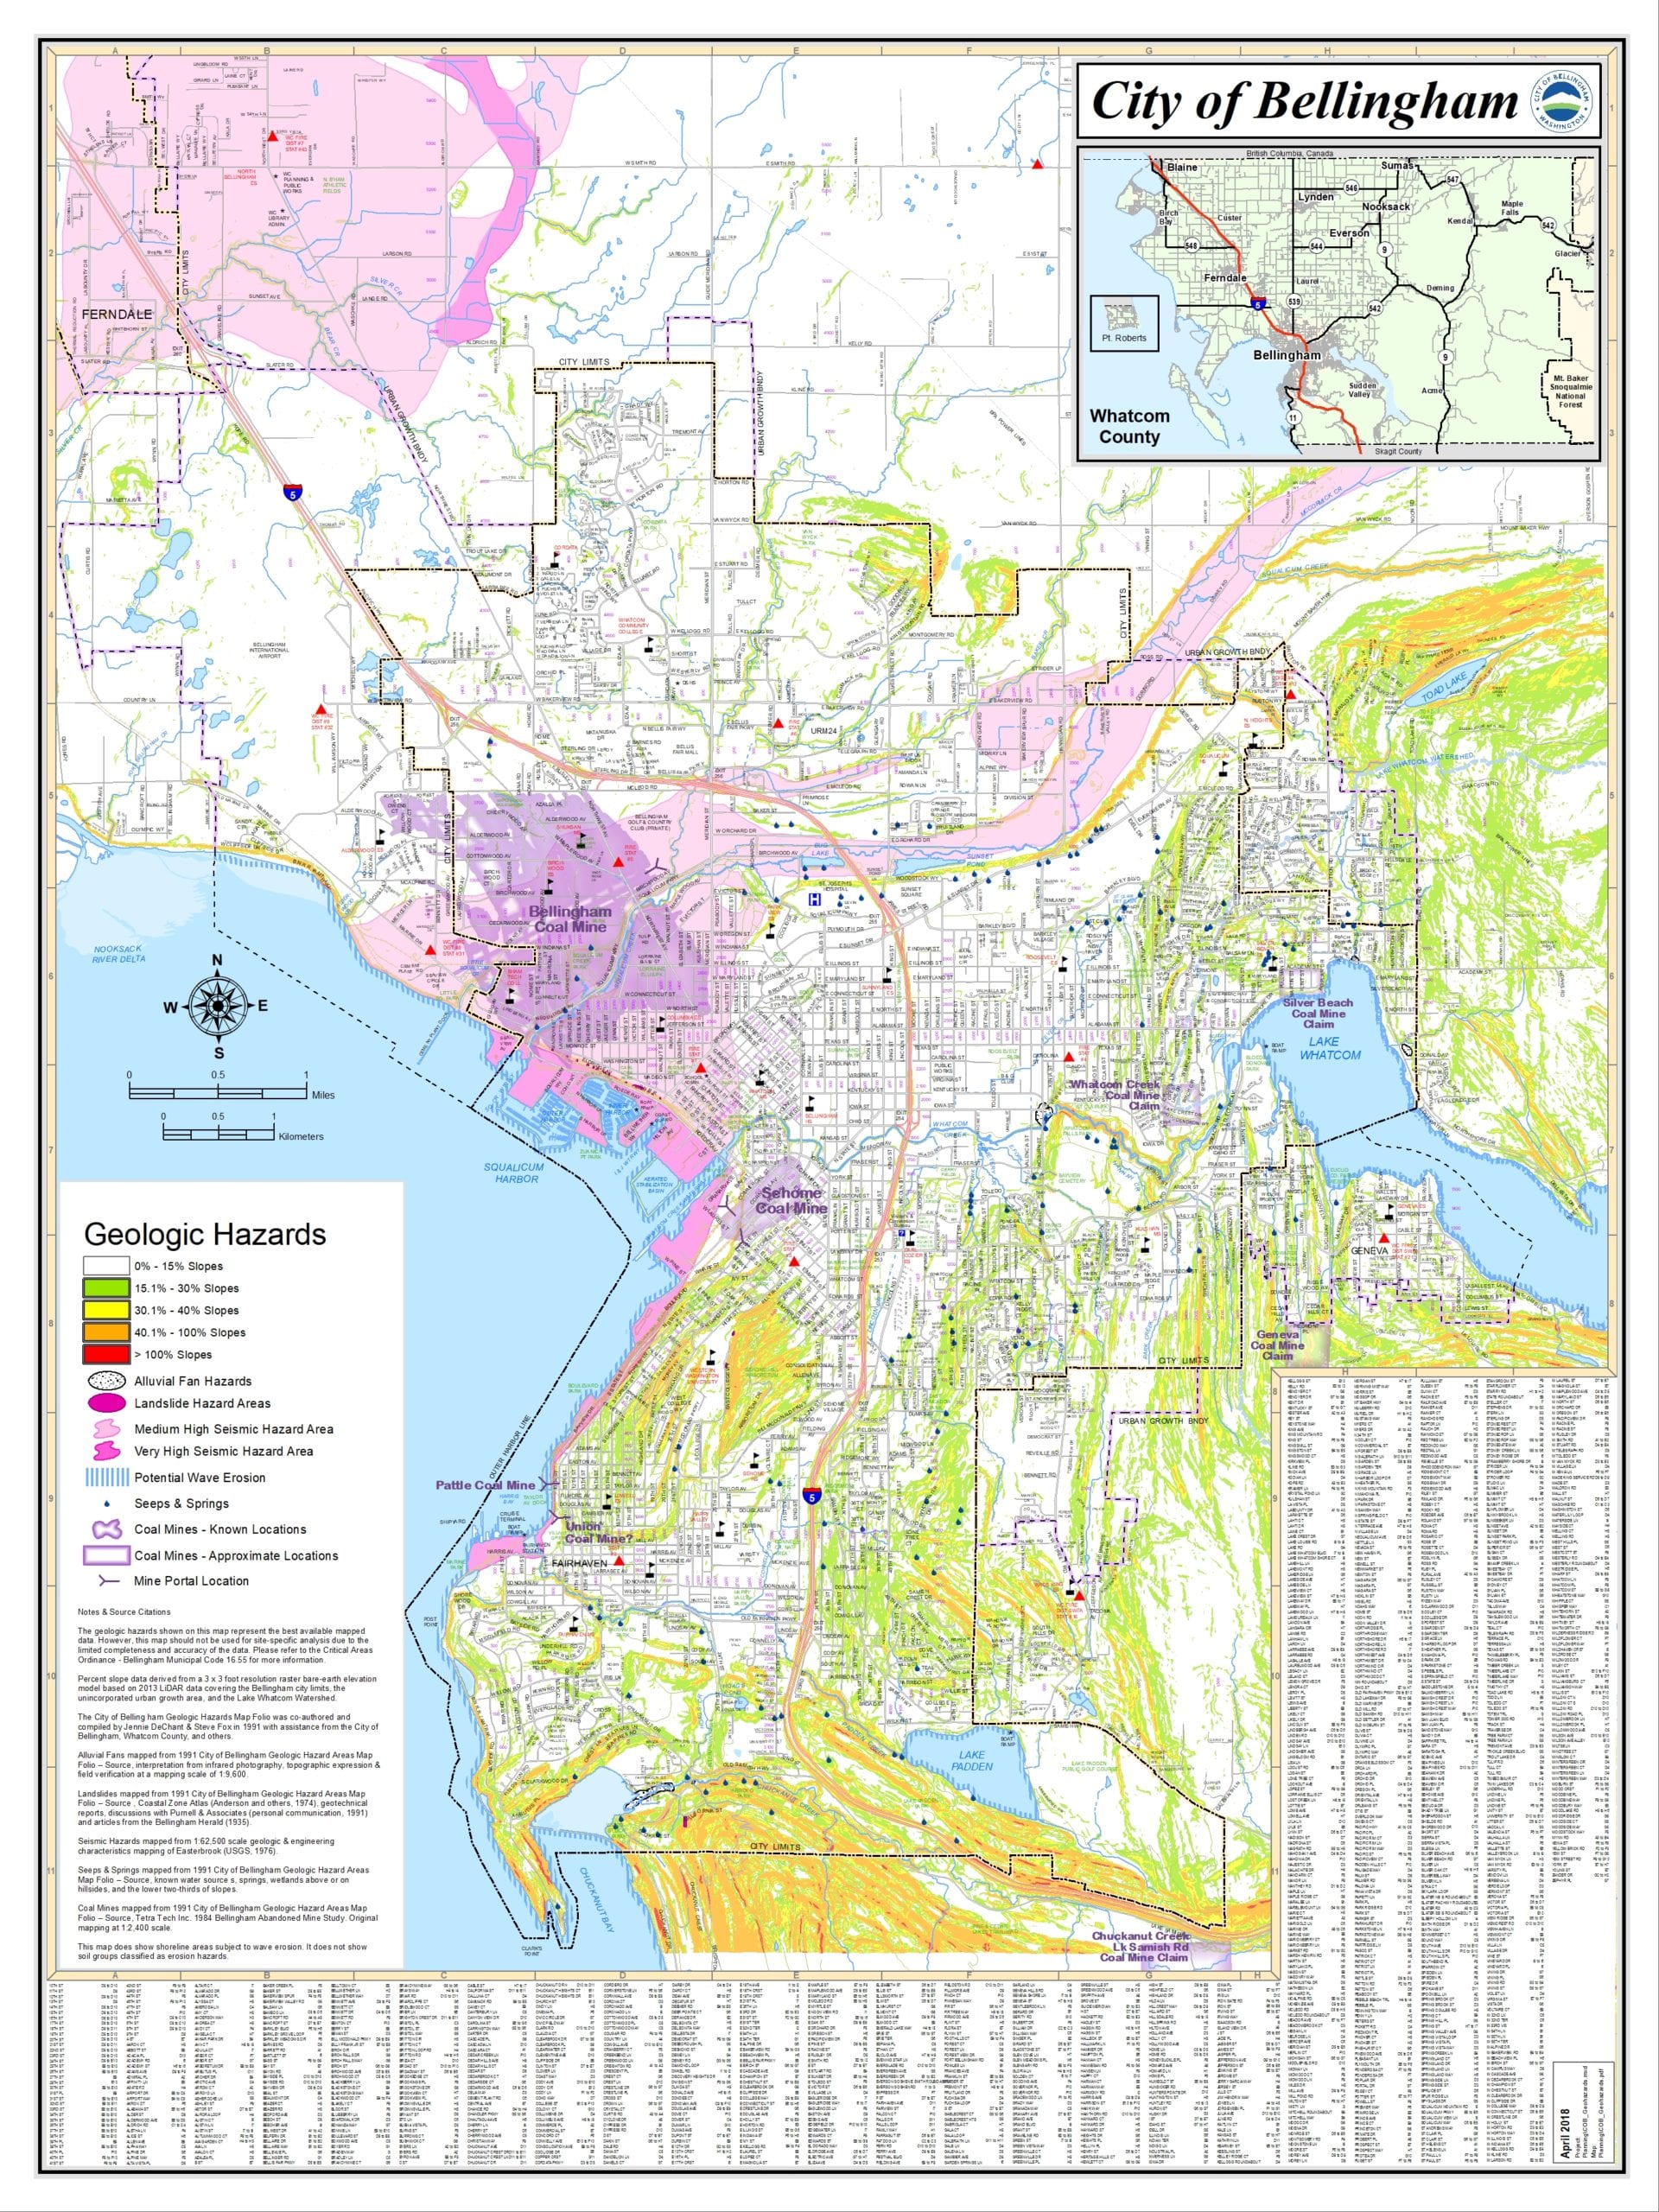 Geological Hazards Map